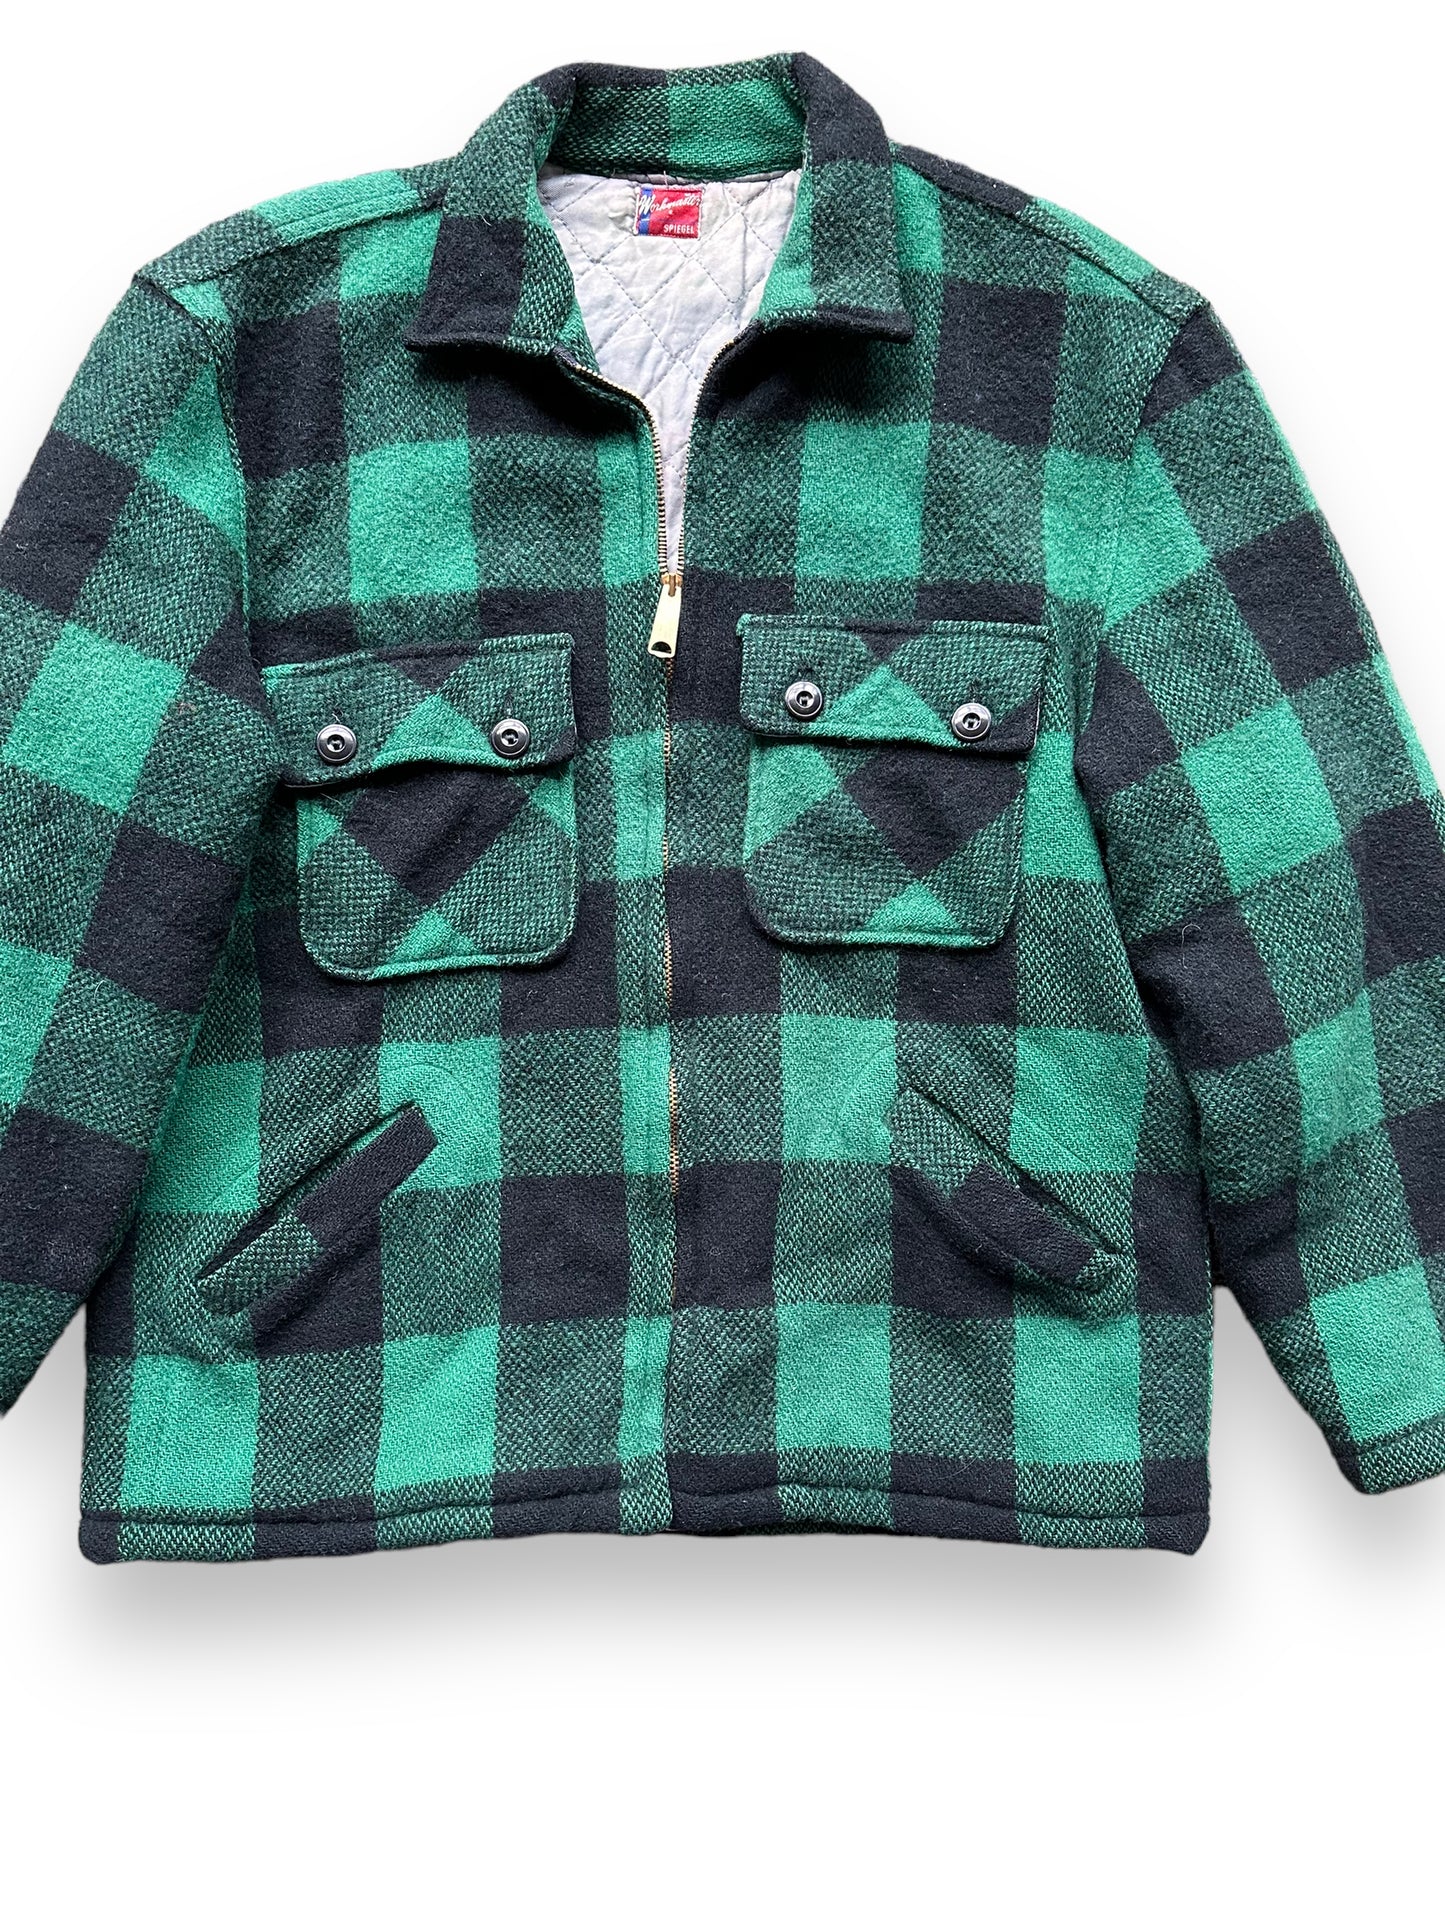 Front Detail on Vintage Green & Black Spiegel Workmaster Jacket SZ L | Vintage Wool Jacket Seattle | Barn Owl Vintage Seattle